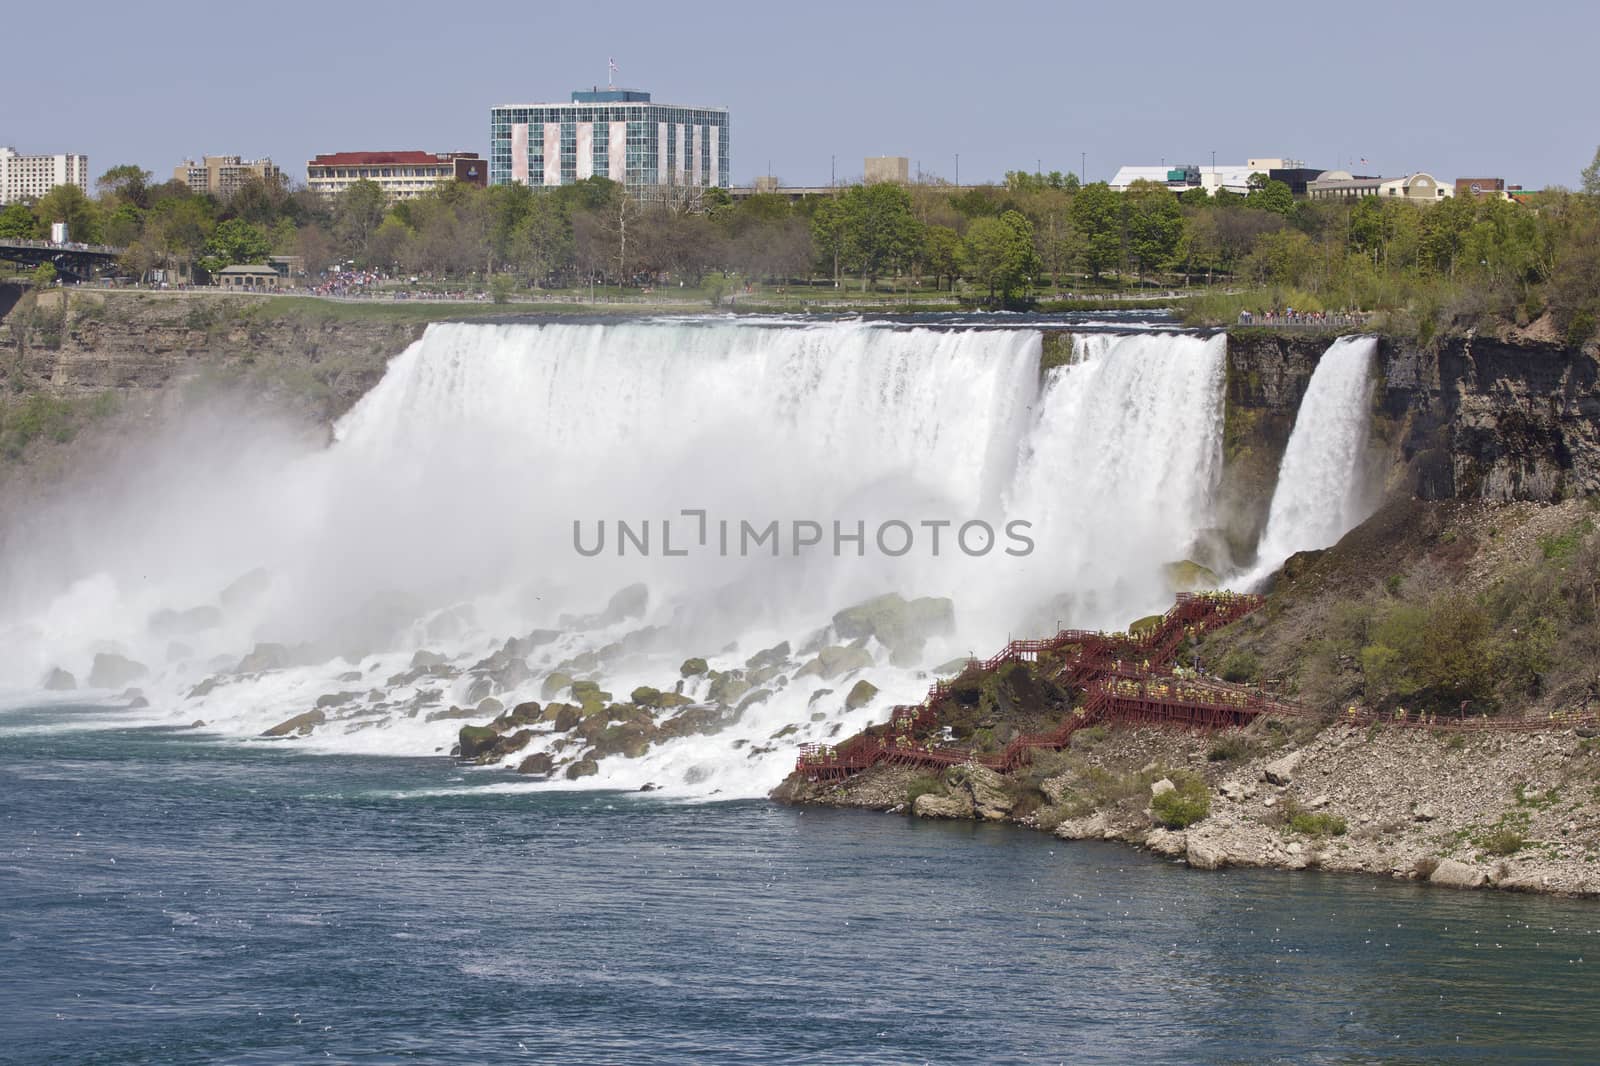 Beautiful image of the amazing Niagara waterfall US side by teo